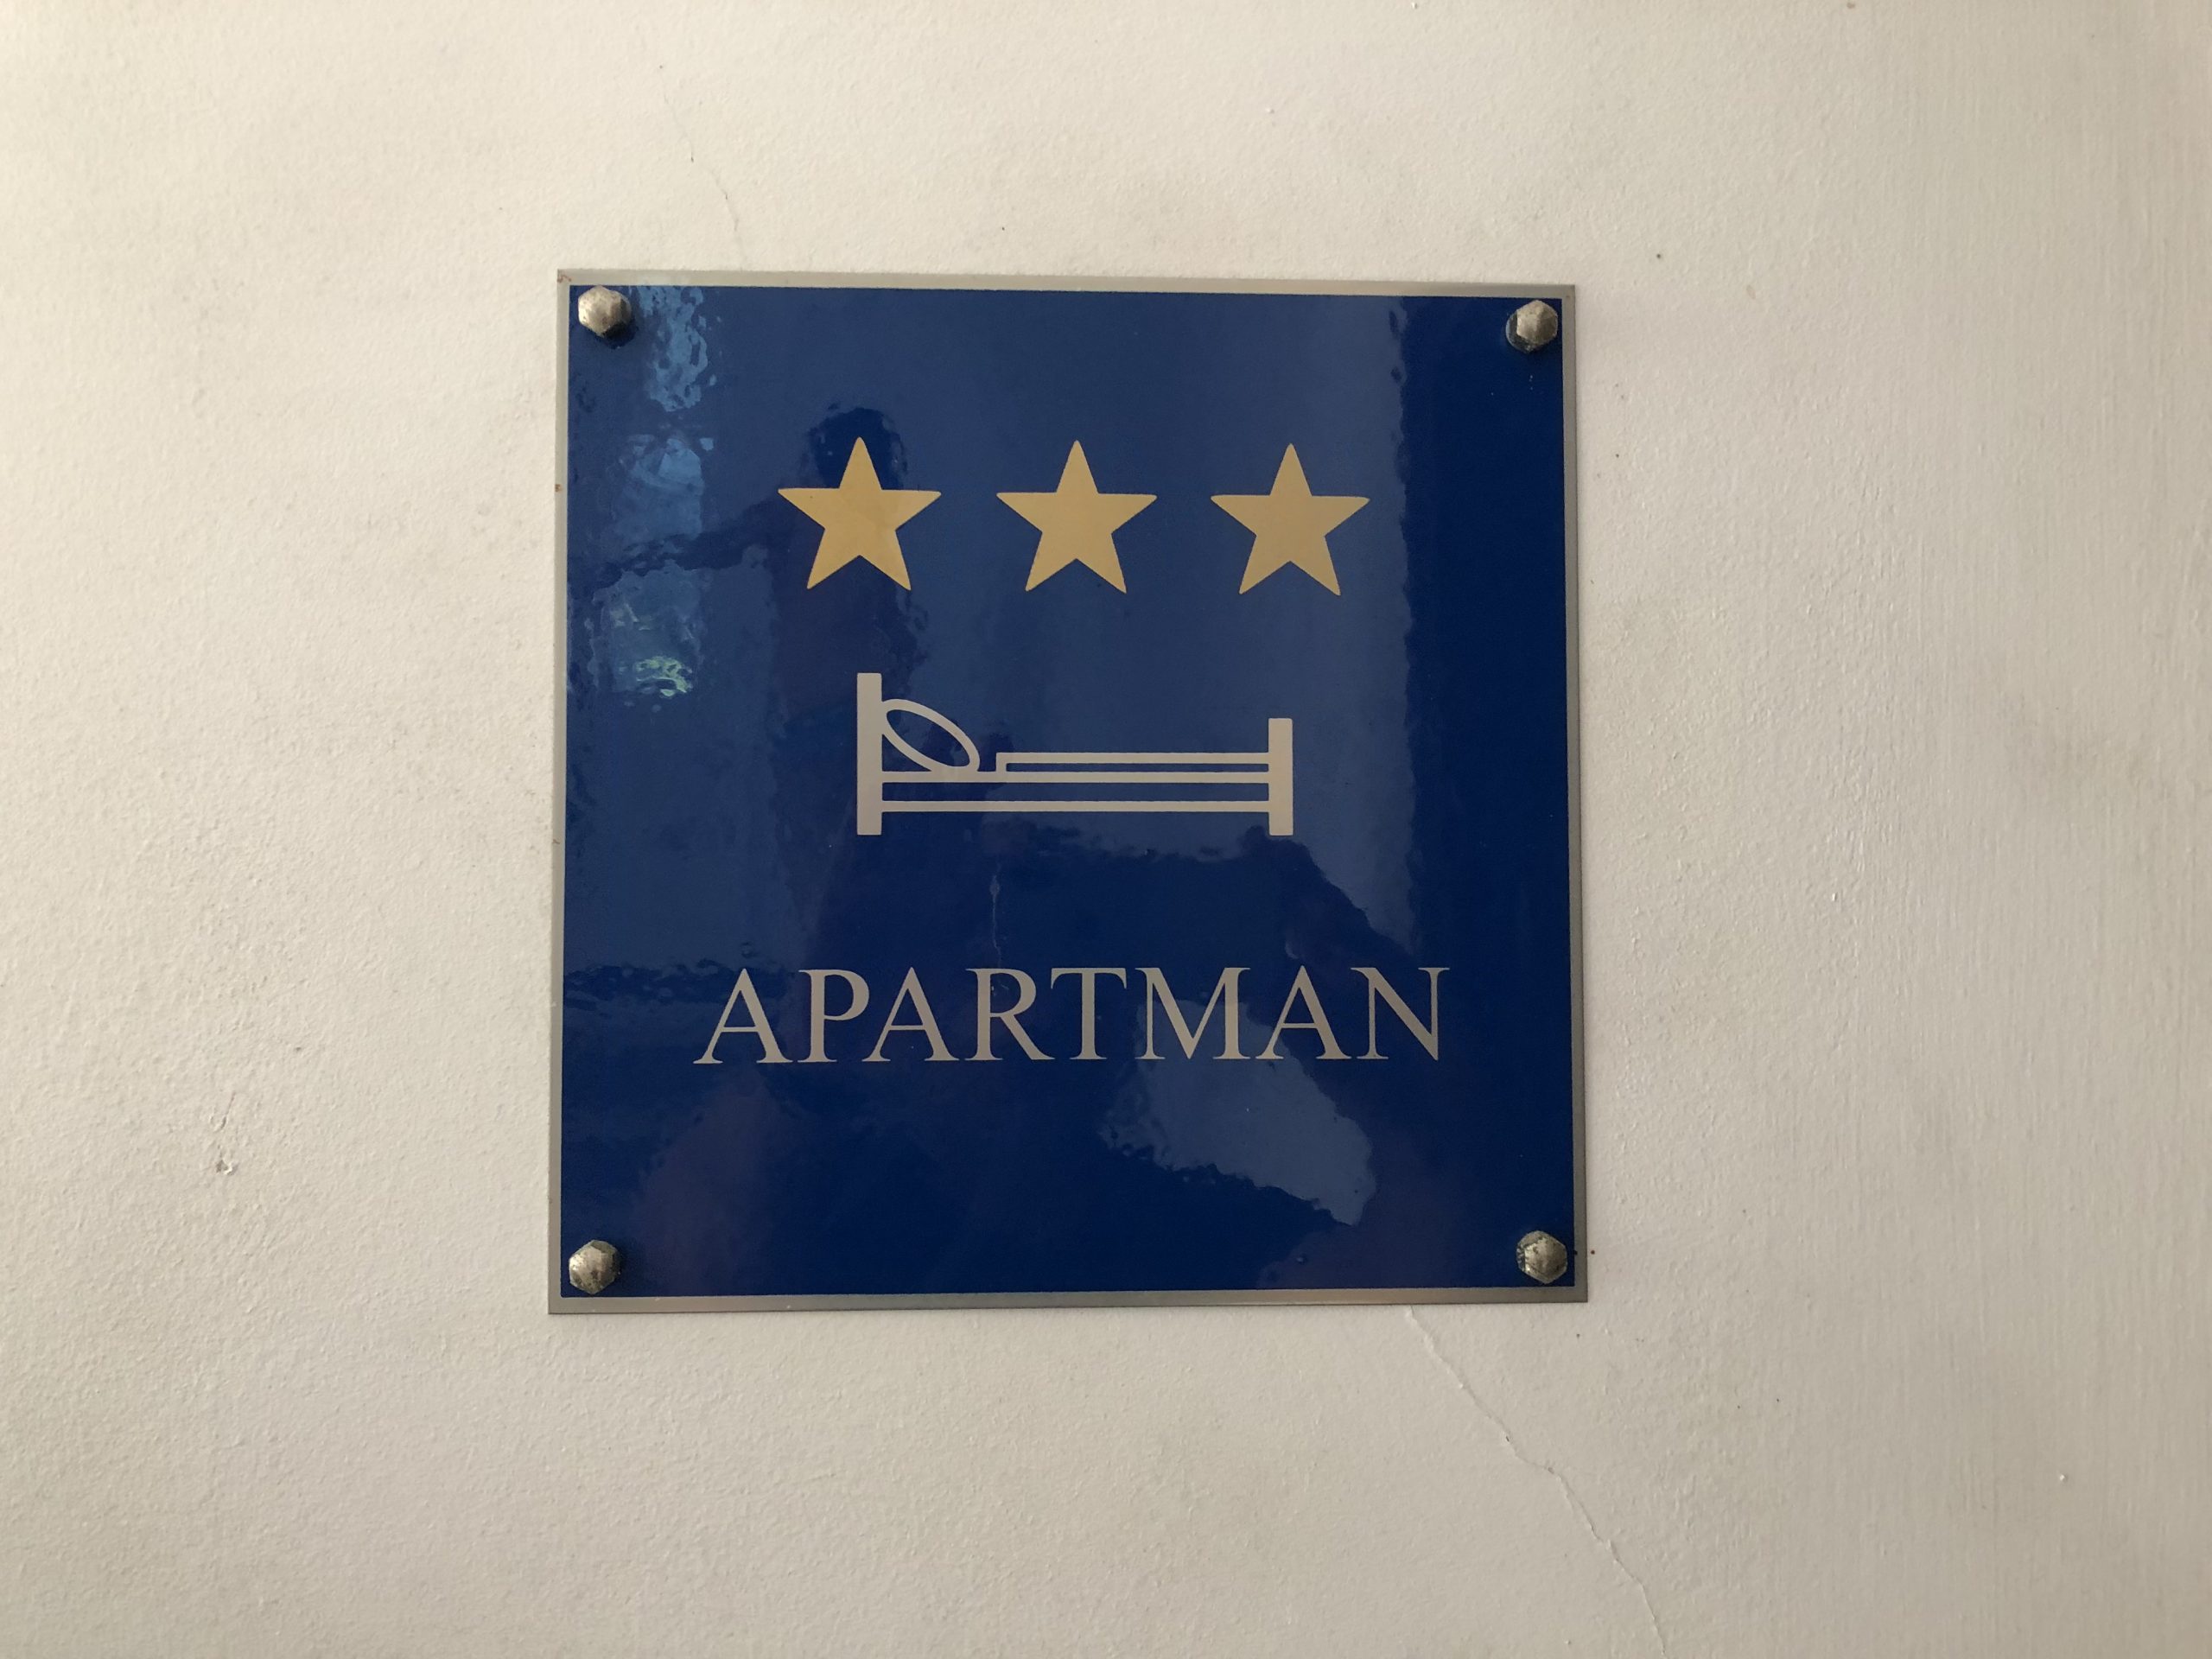 Apartment 3 stars